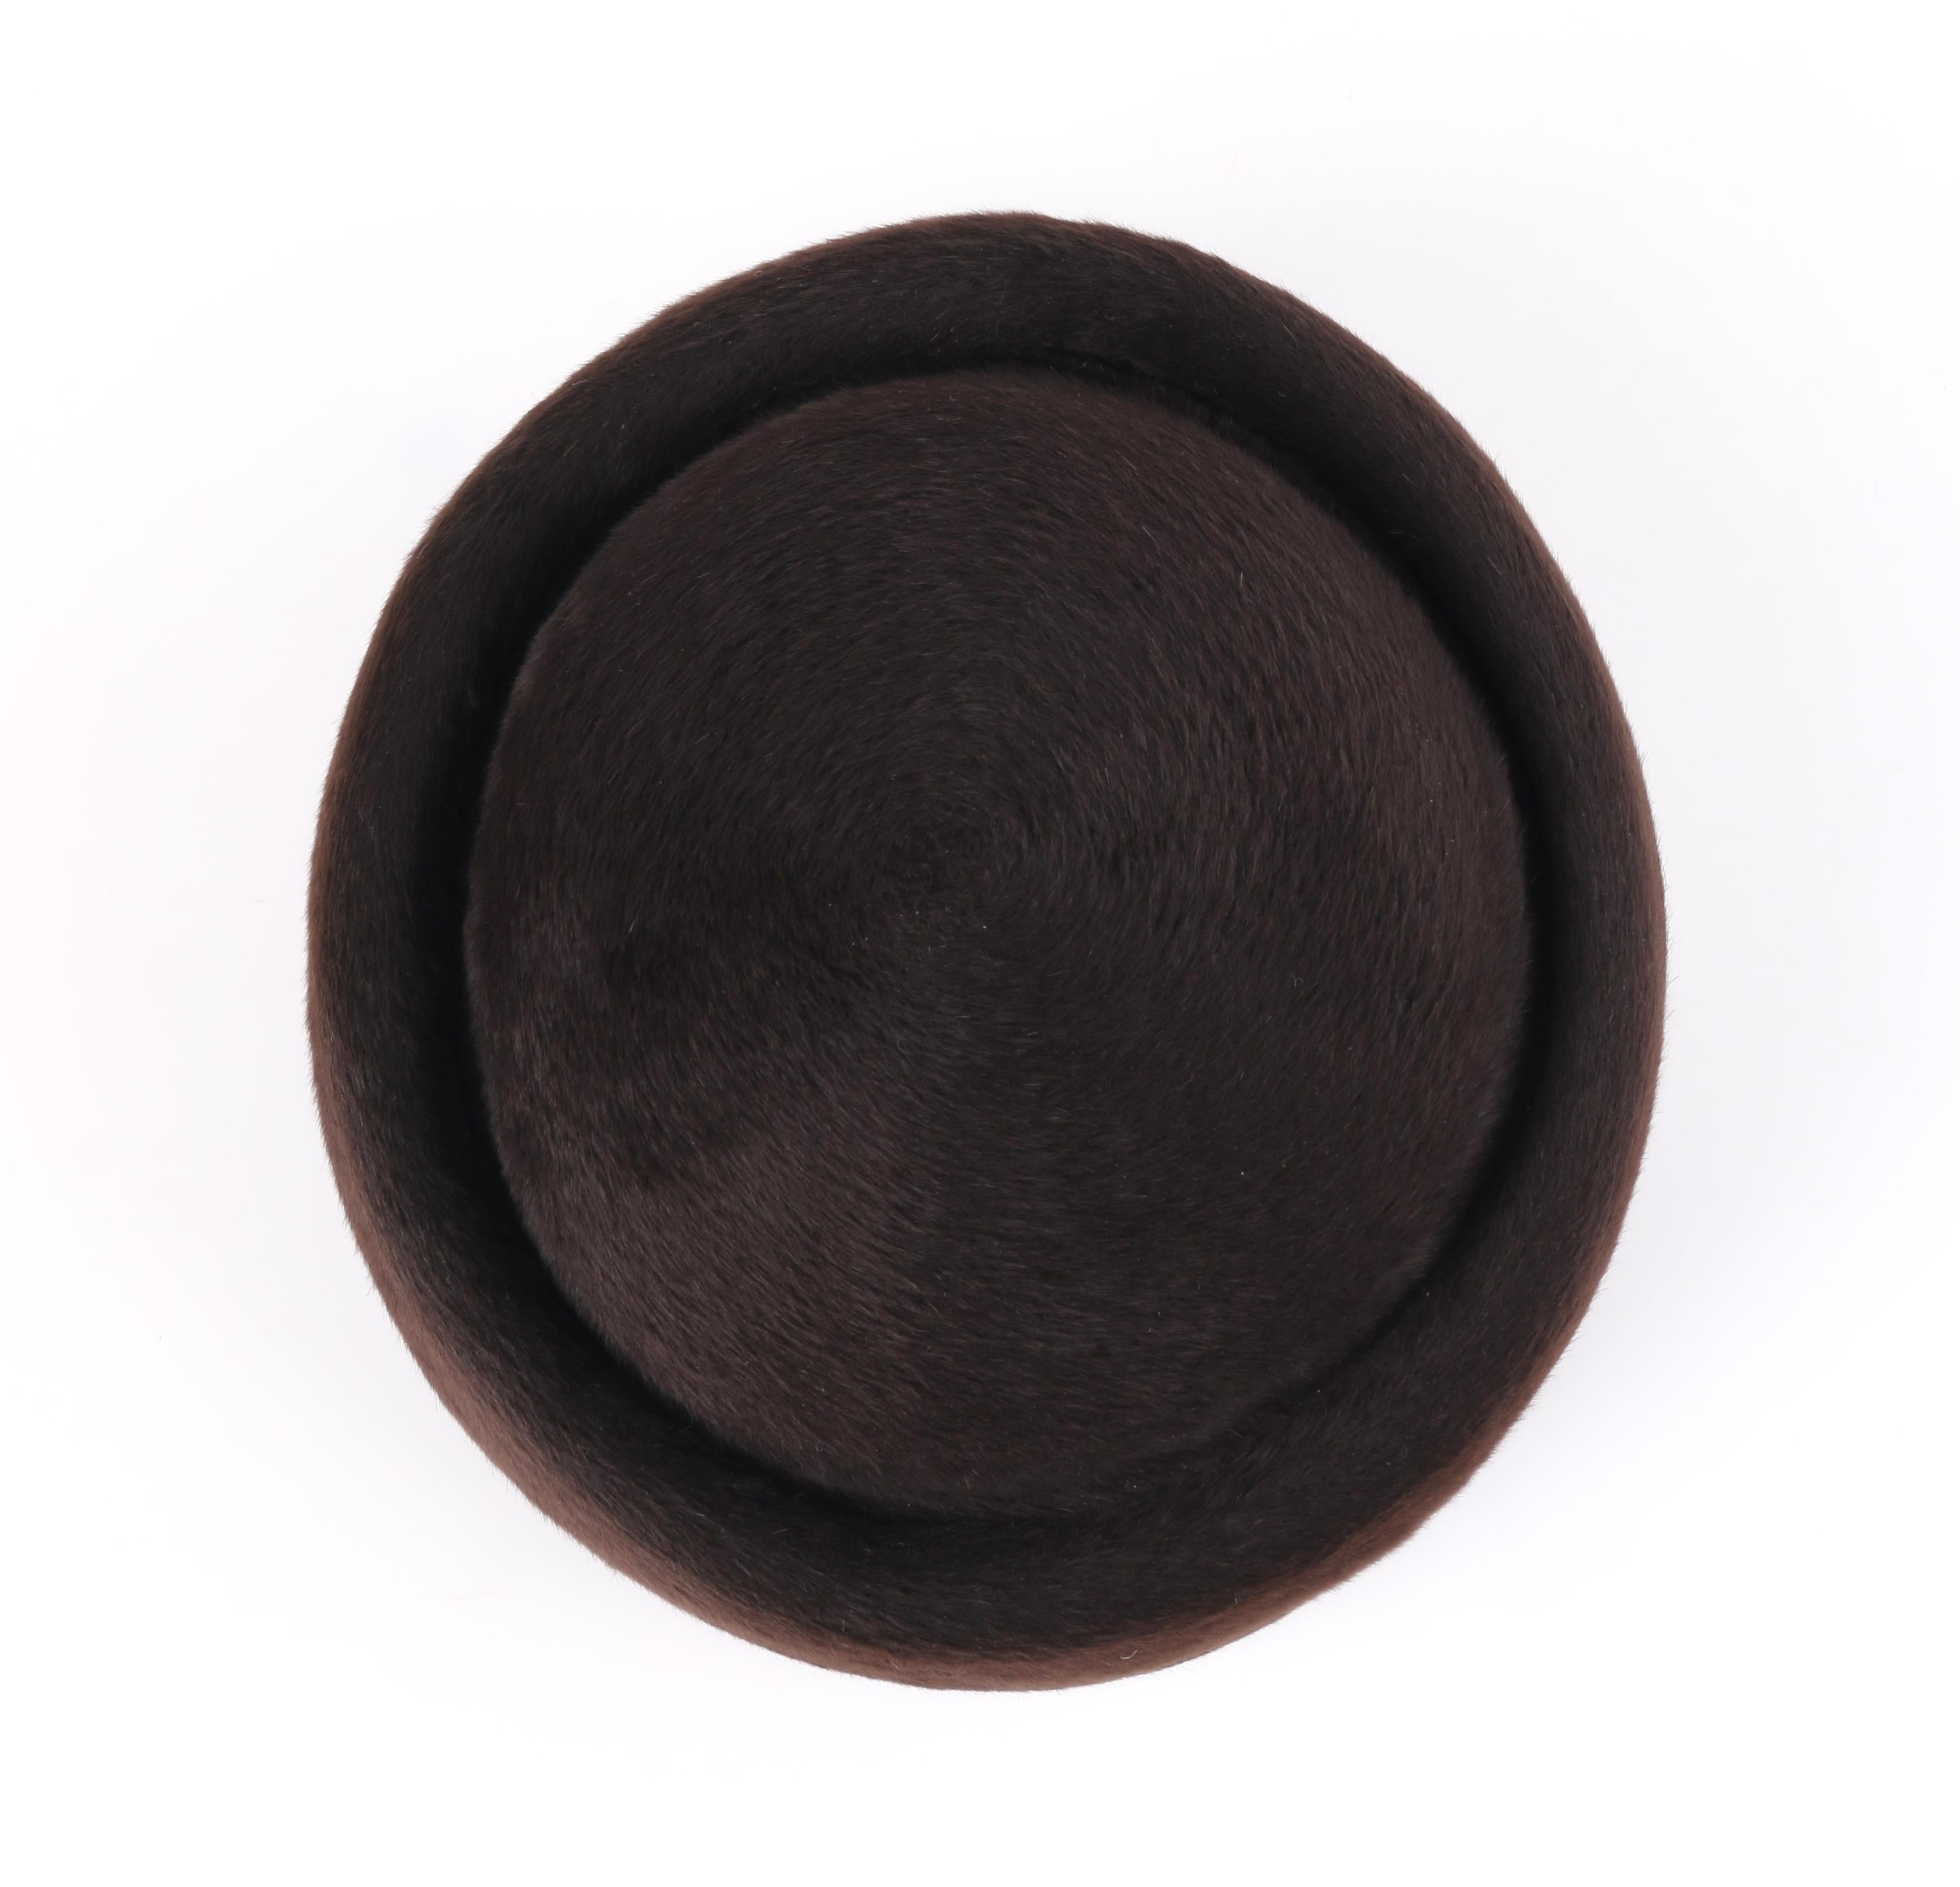 Women's Miss Dior CHRISTIAN DIOR c.1960’s Marc Bohan Dark Brown Felted Fur Pillbox Hat 